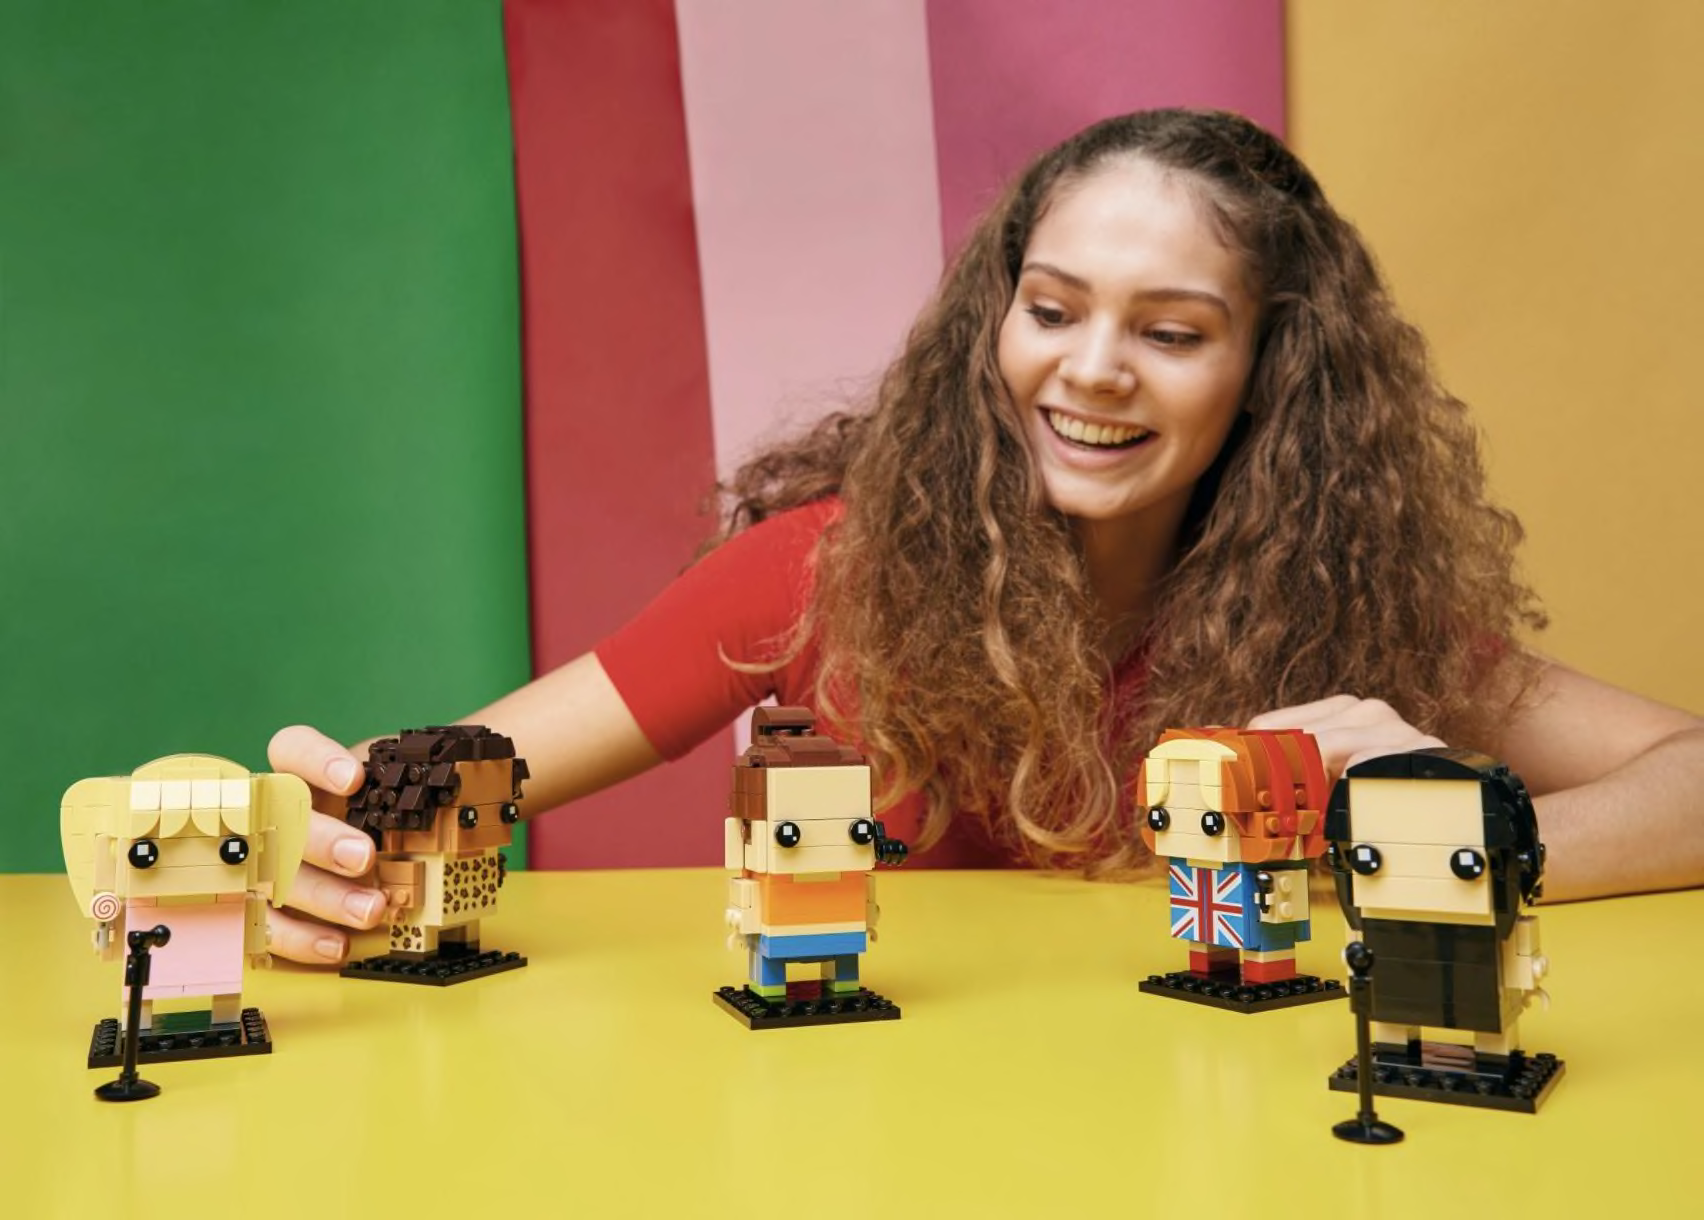 Discover LEGO's new Spice Girls BrickHeadz set.